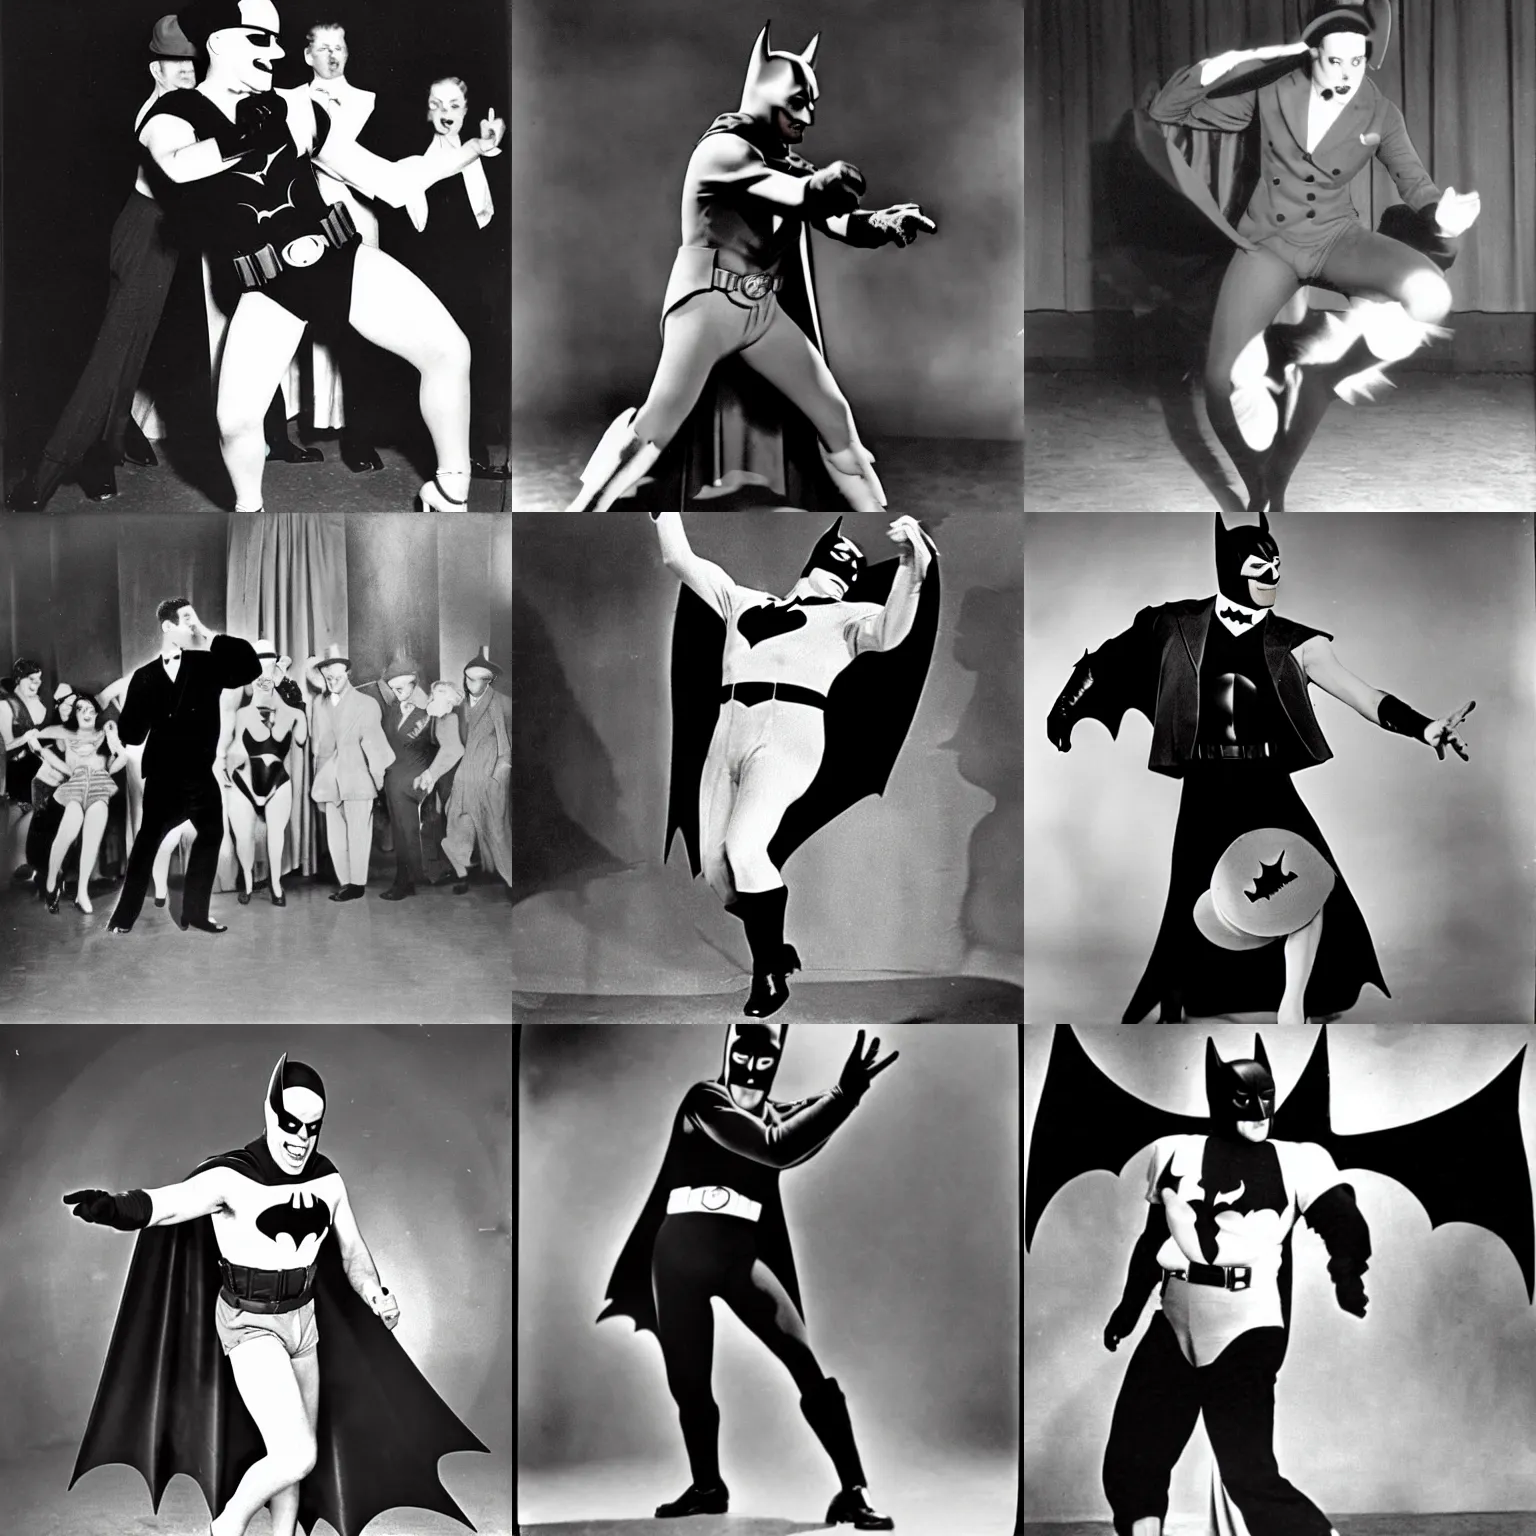 Prompt: batman dancing in a vaudeville show, 1 9 4 0 s television still, vintage photography